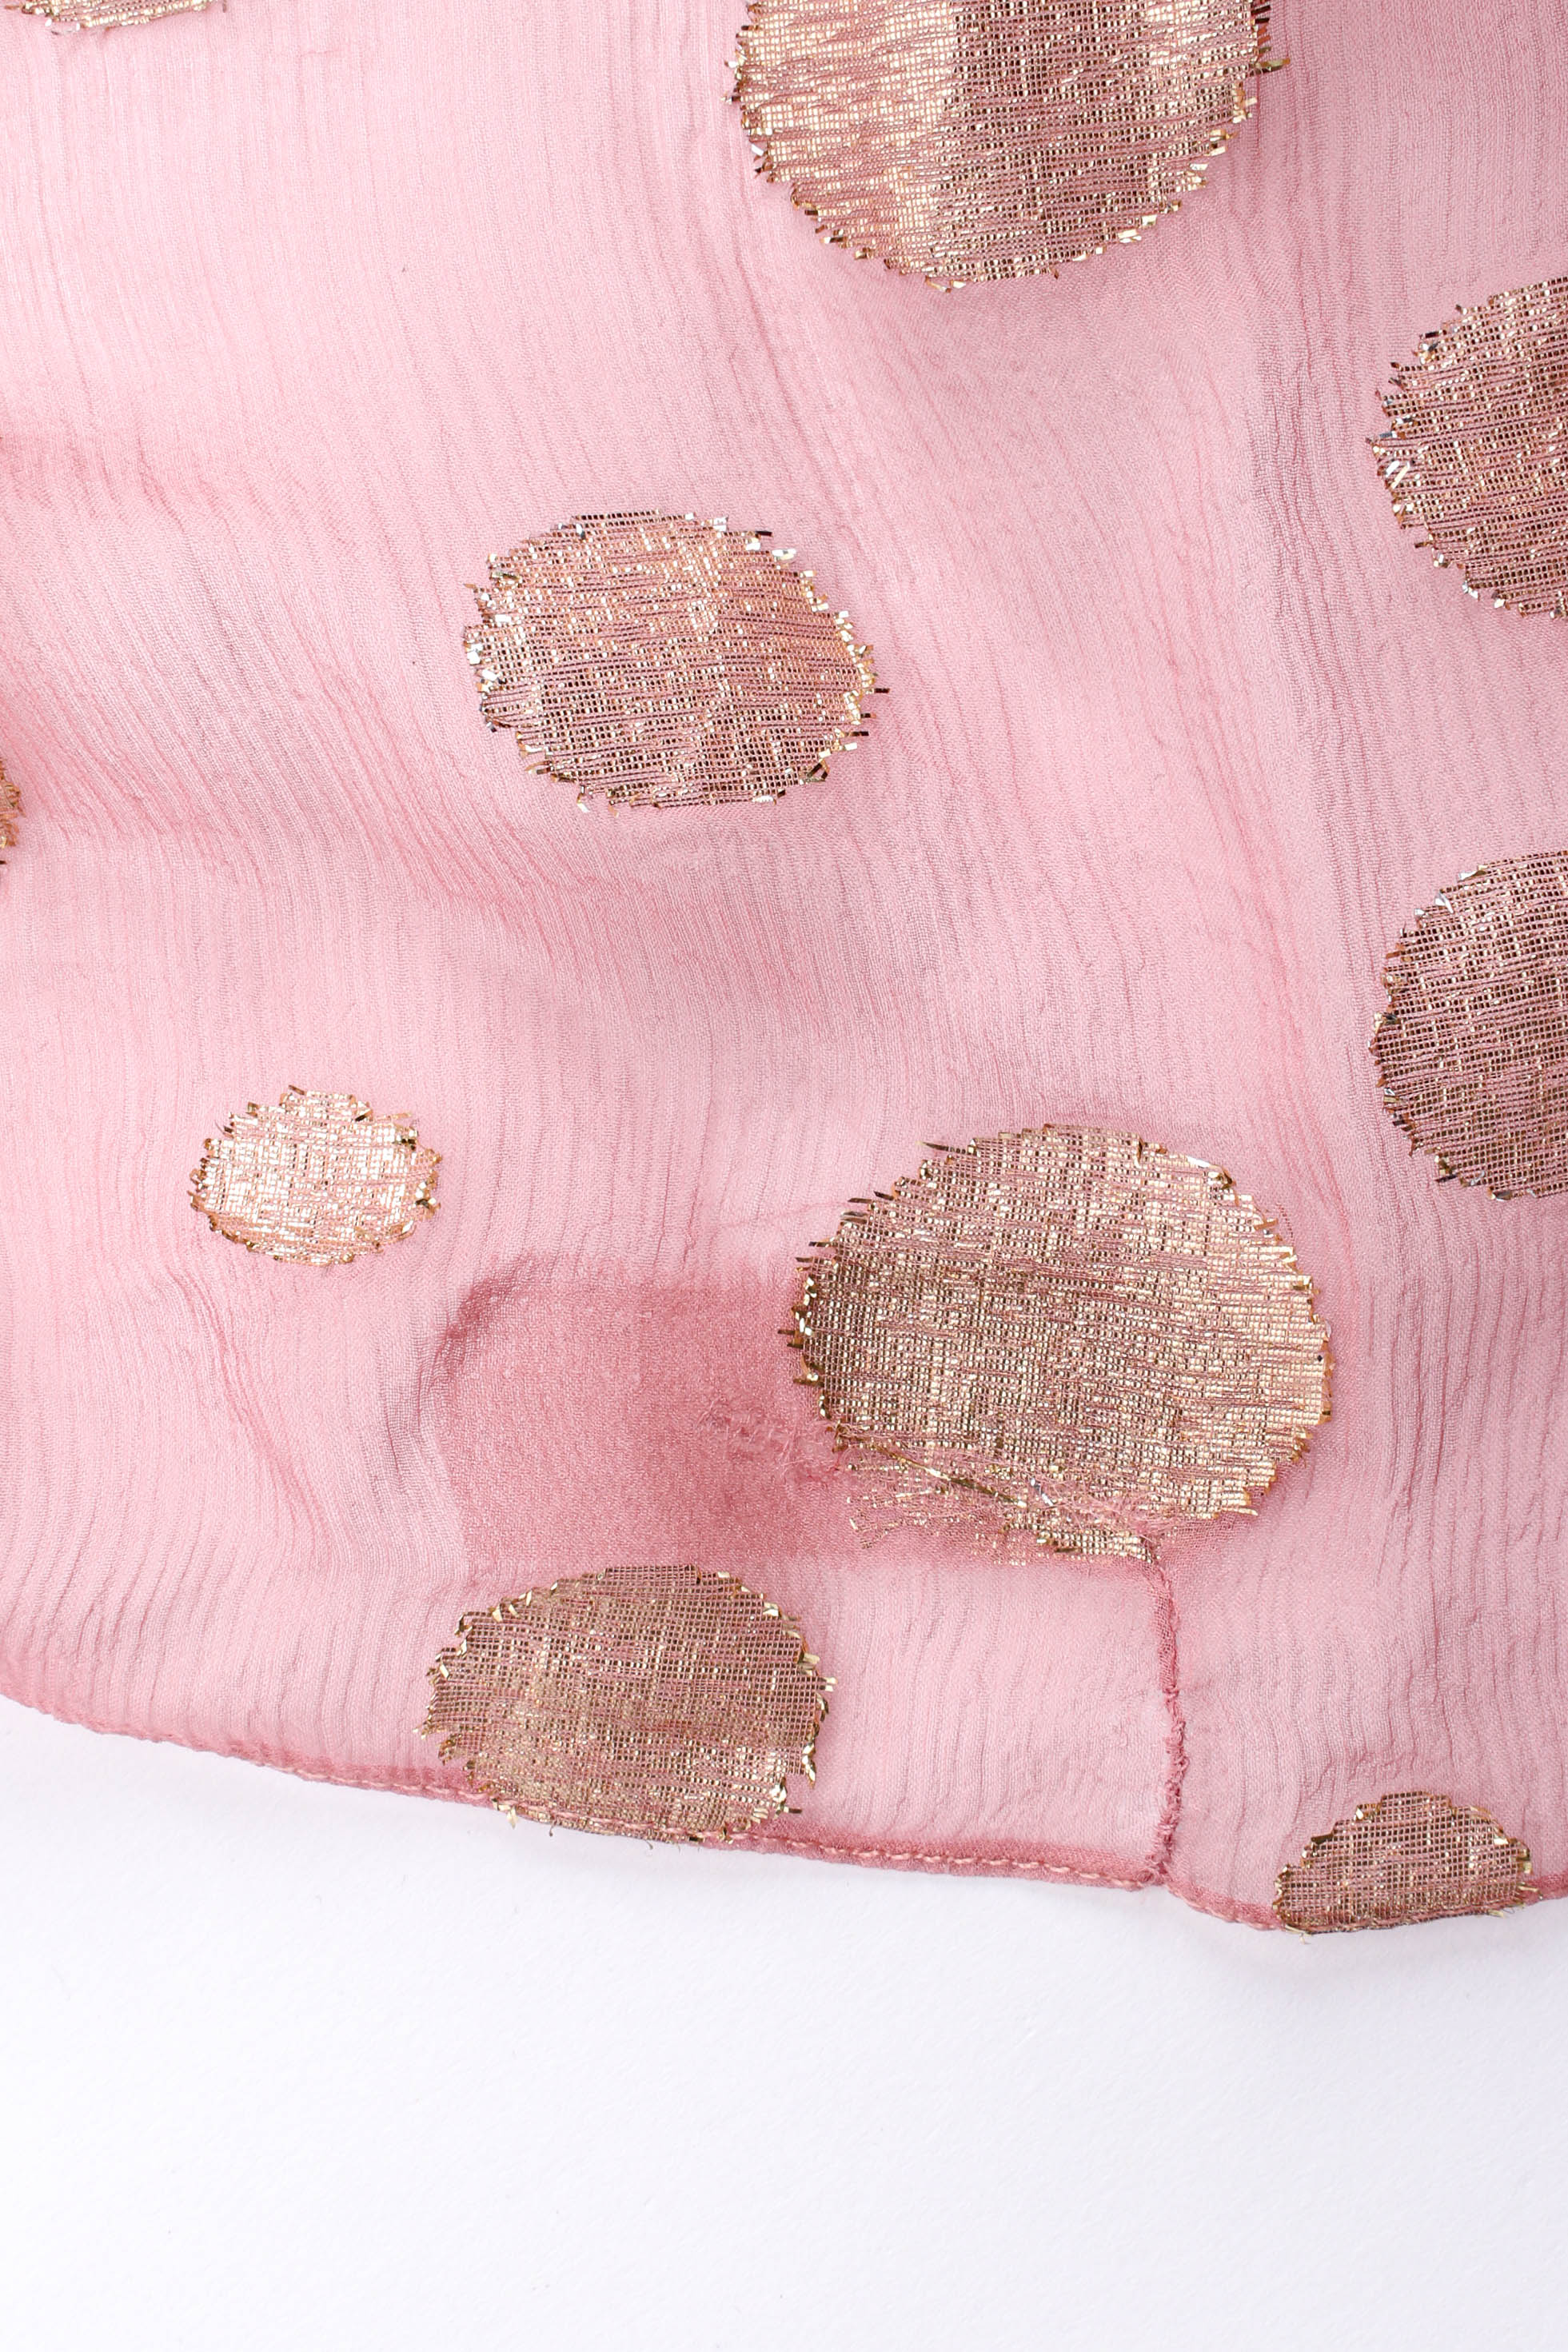 Vintage Adele Simpson Beaded Textured Dot Dress patched fabric hem @ Recess LA